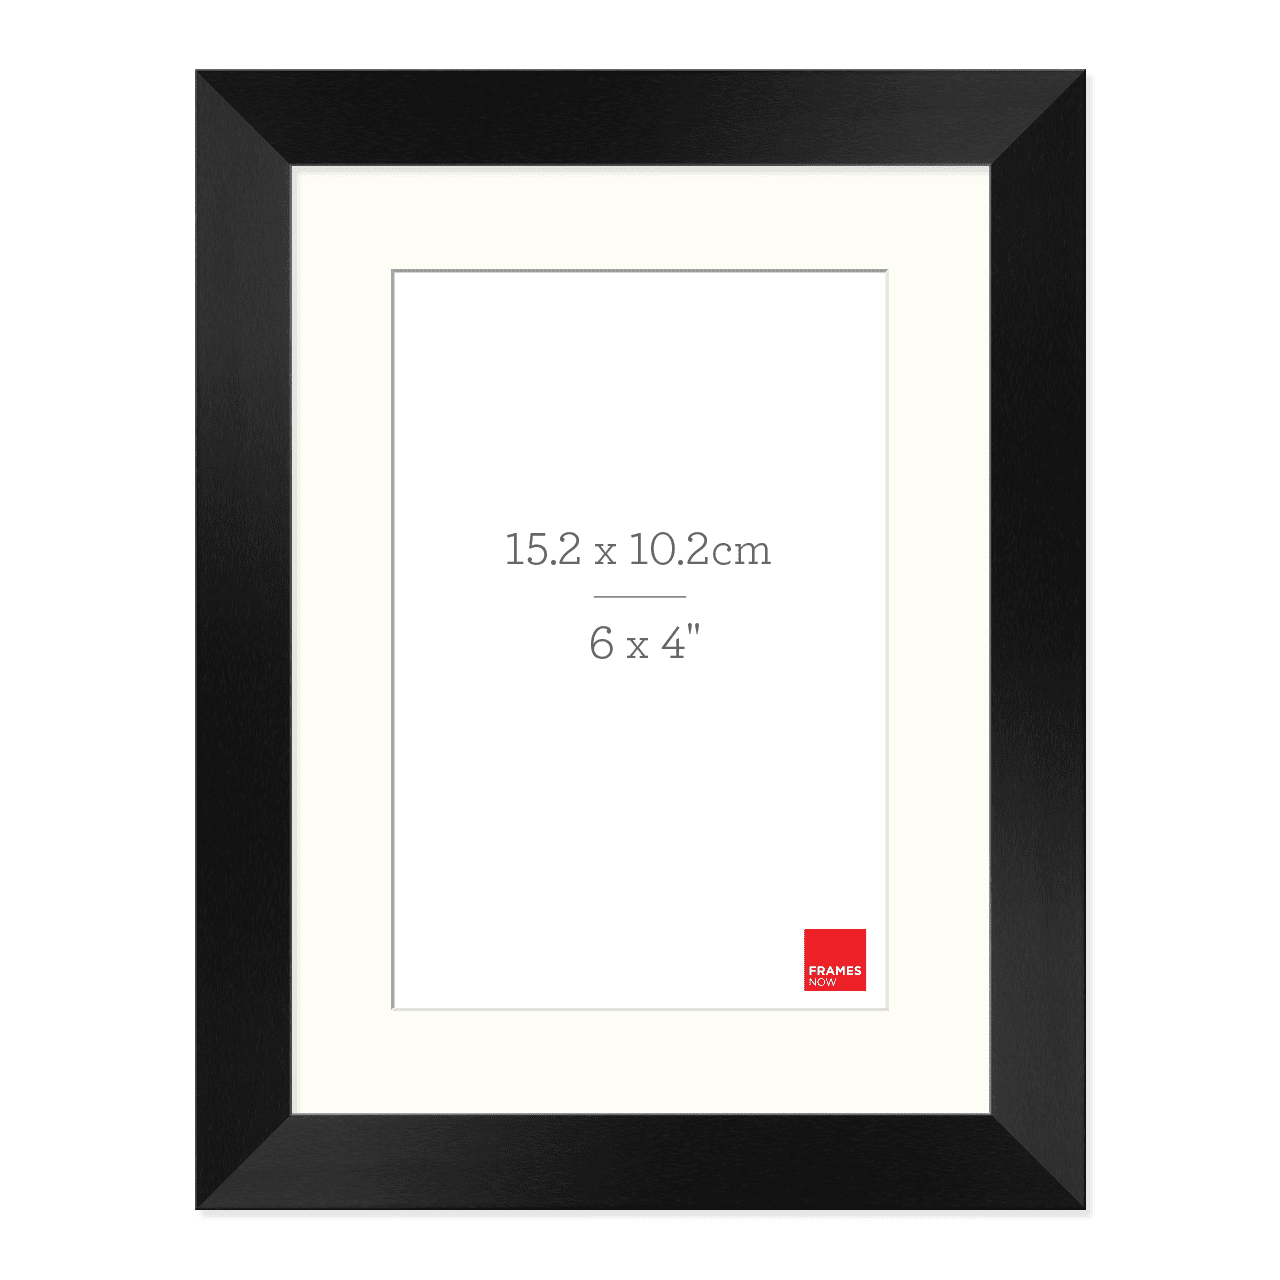 Premium Matte Black Box Picture Frame with Matboard for 15.2 x 10.2cm Artwork